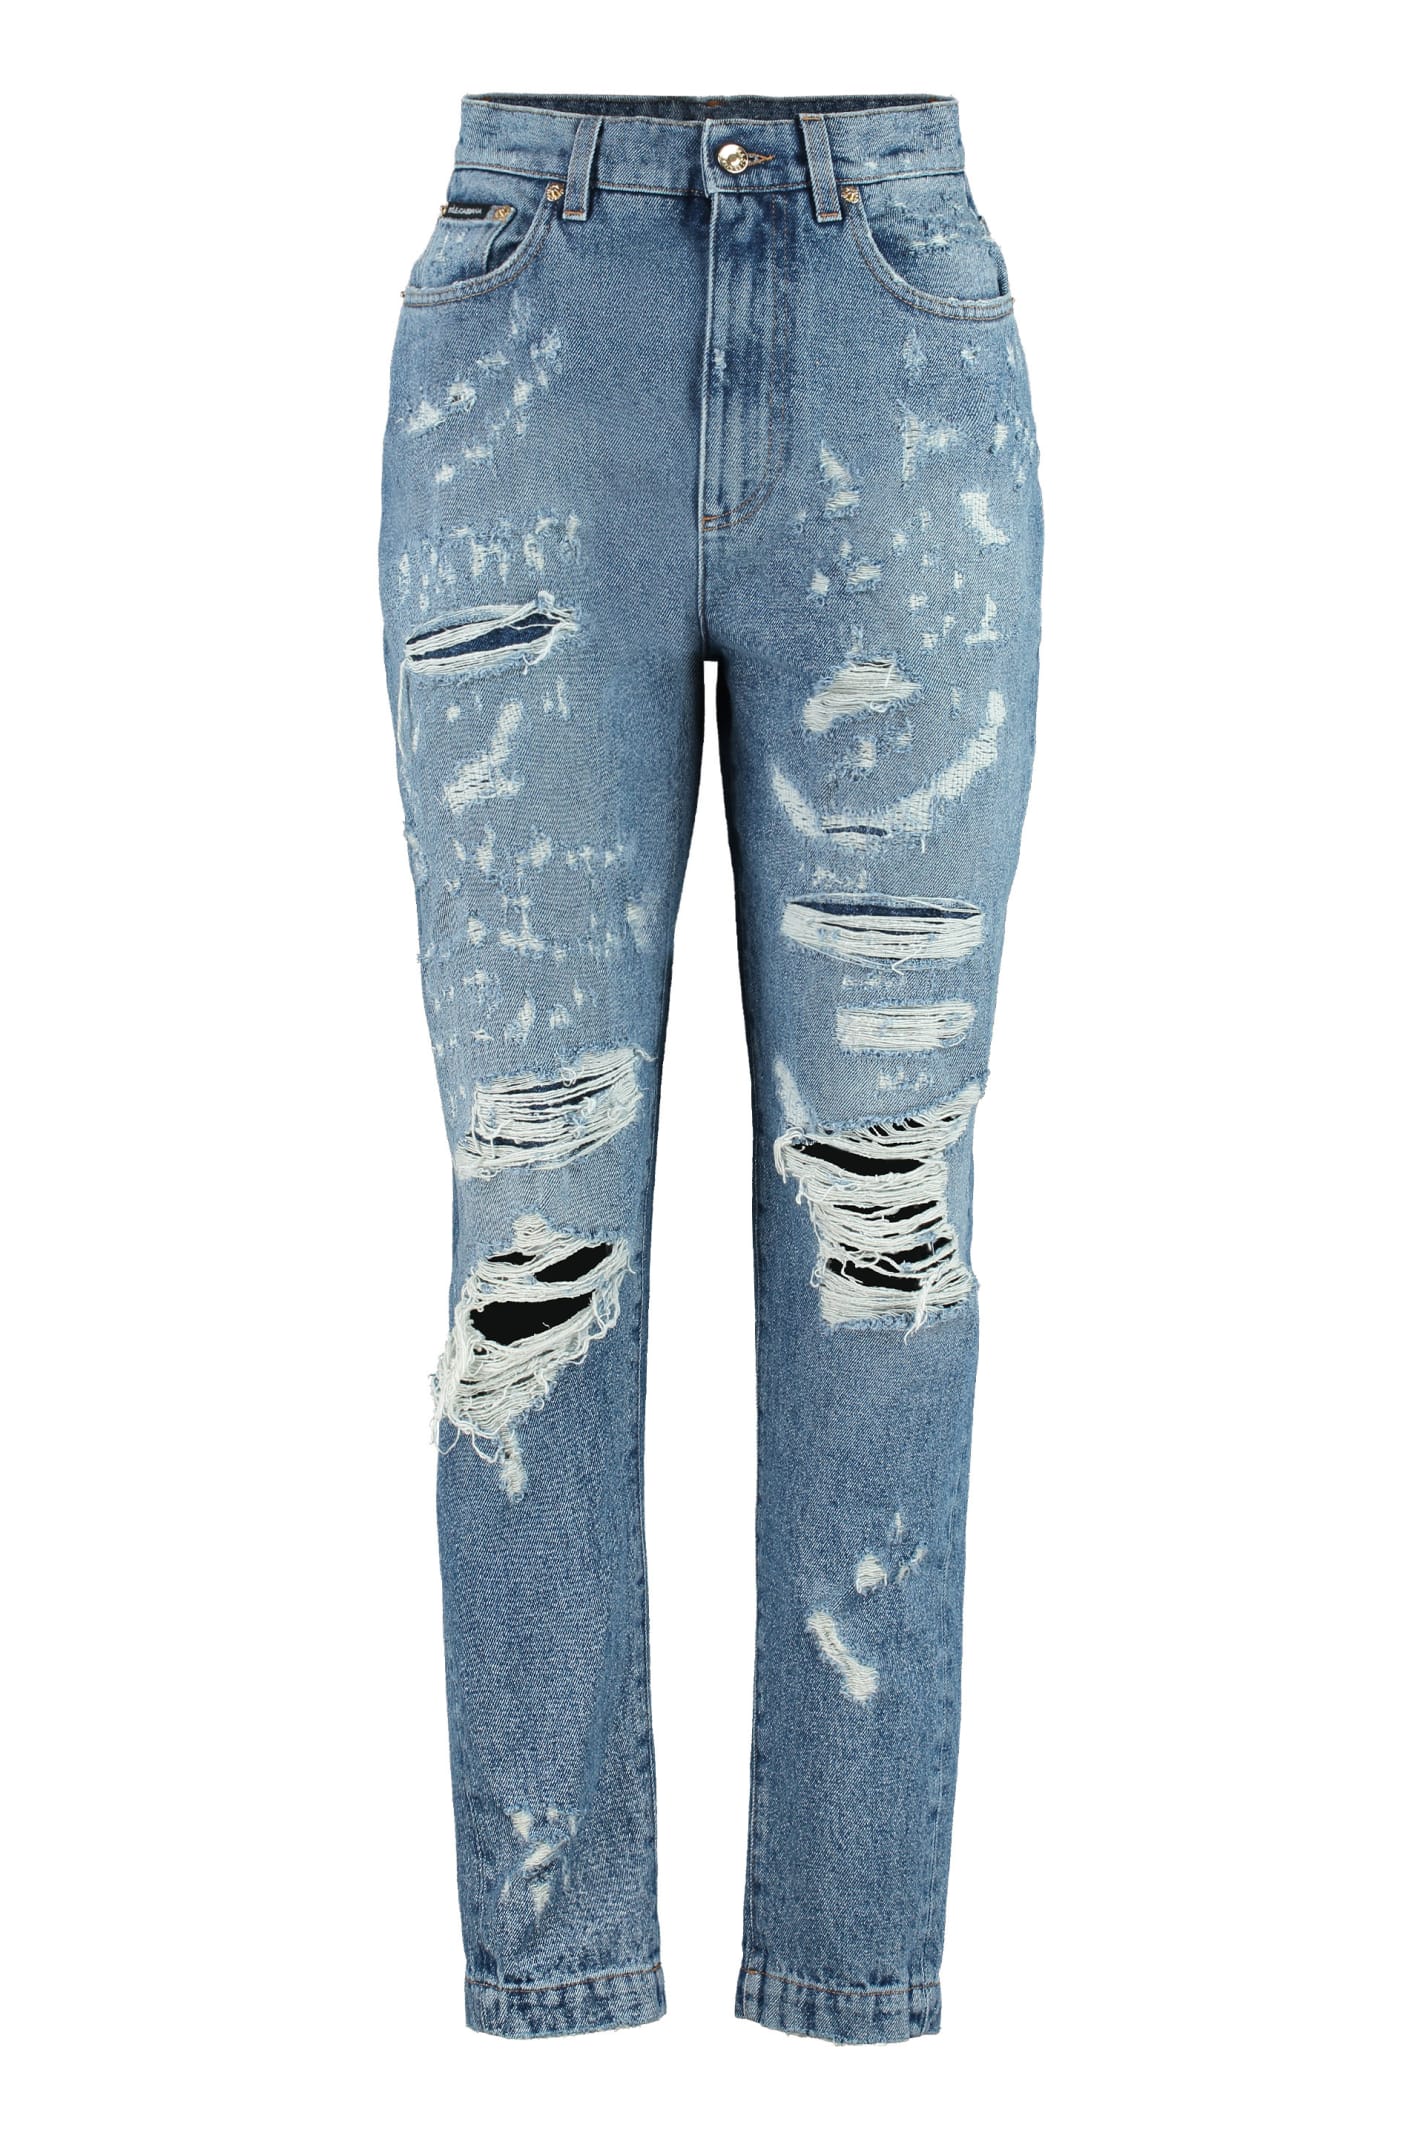 Dolce & Gabbana Amber Worn-out Details Jeans In Denim